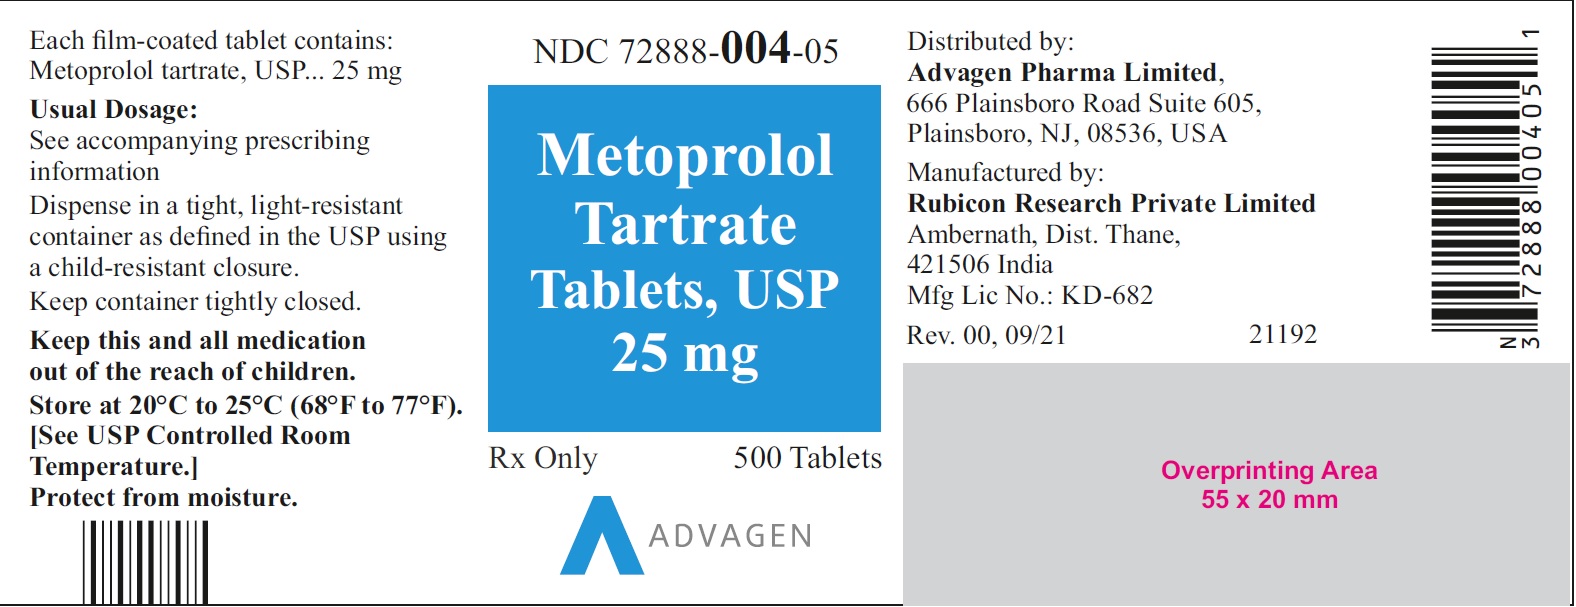 NDC 72888-004-05 - Metoprolol Tartrate Tablets, USP 25 mg - 500 Tablets